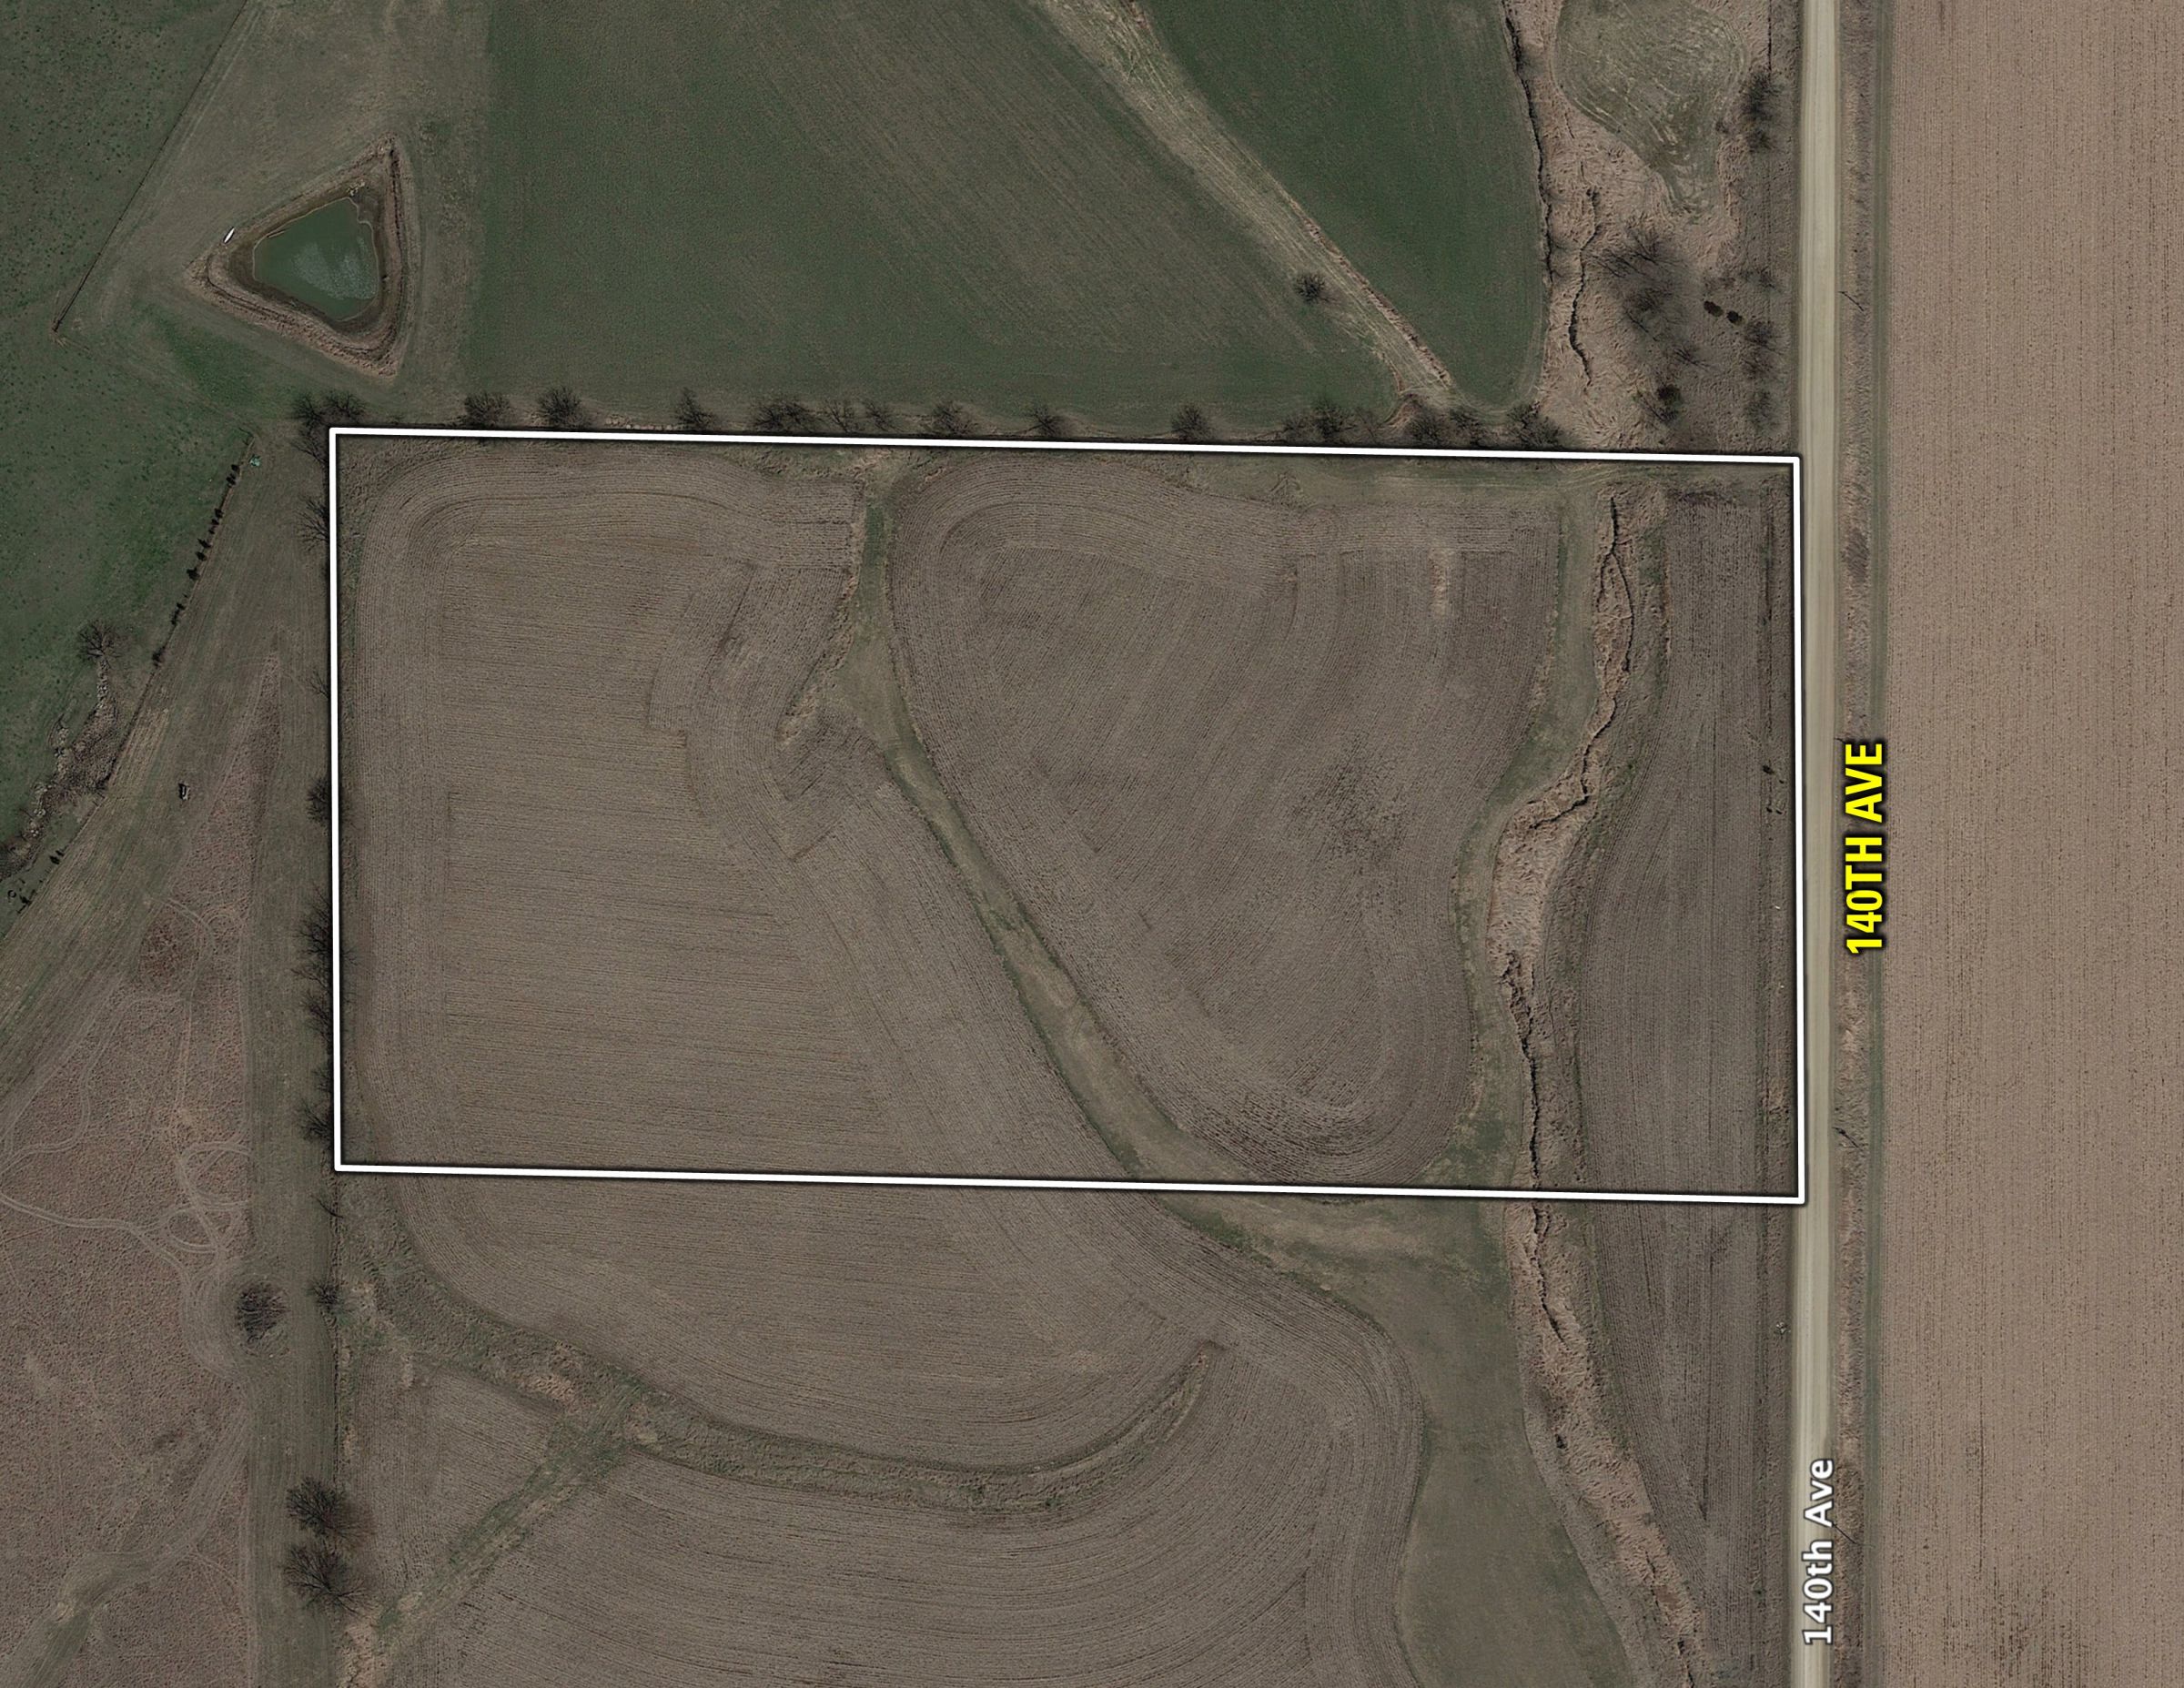 development-land-warren-county-iowa-20-acres-listing-number-15426-0-2021-03-26-185702.jpg